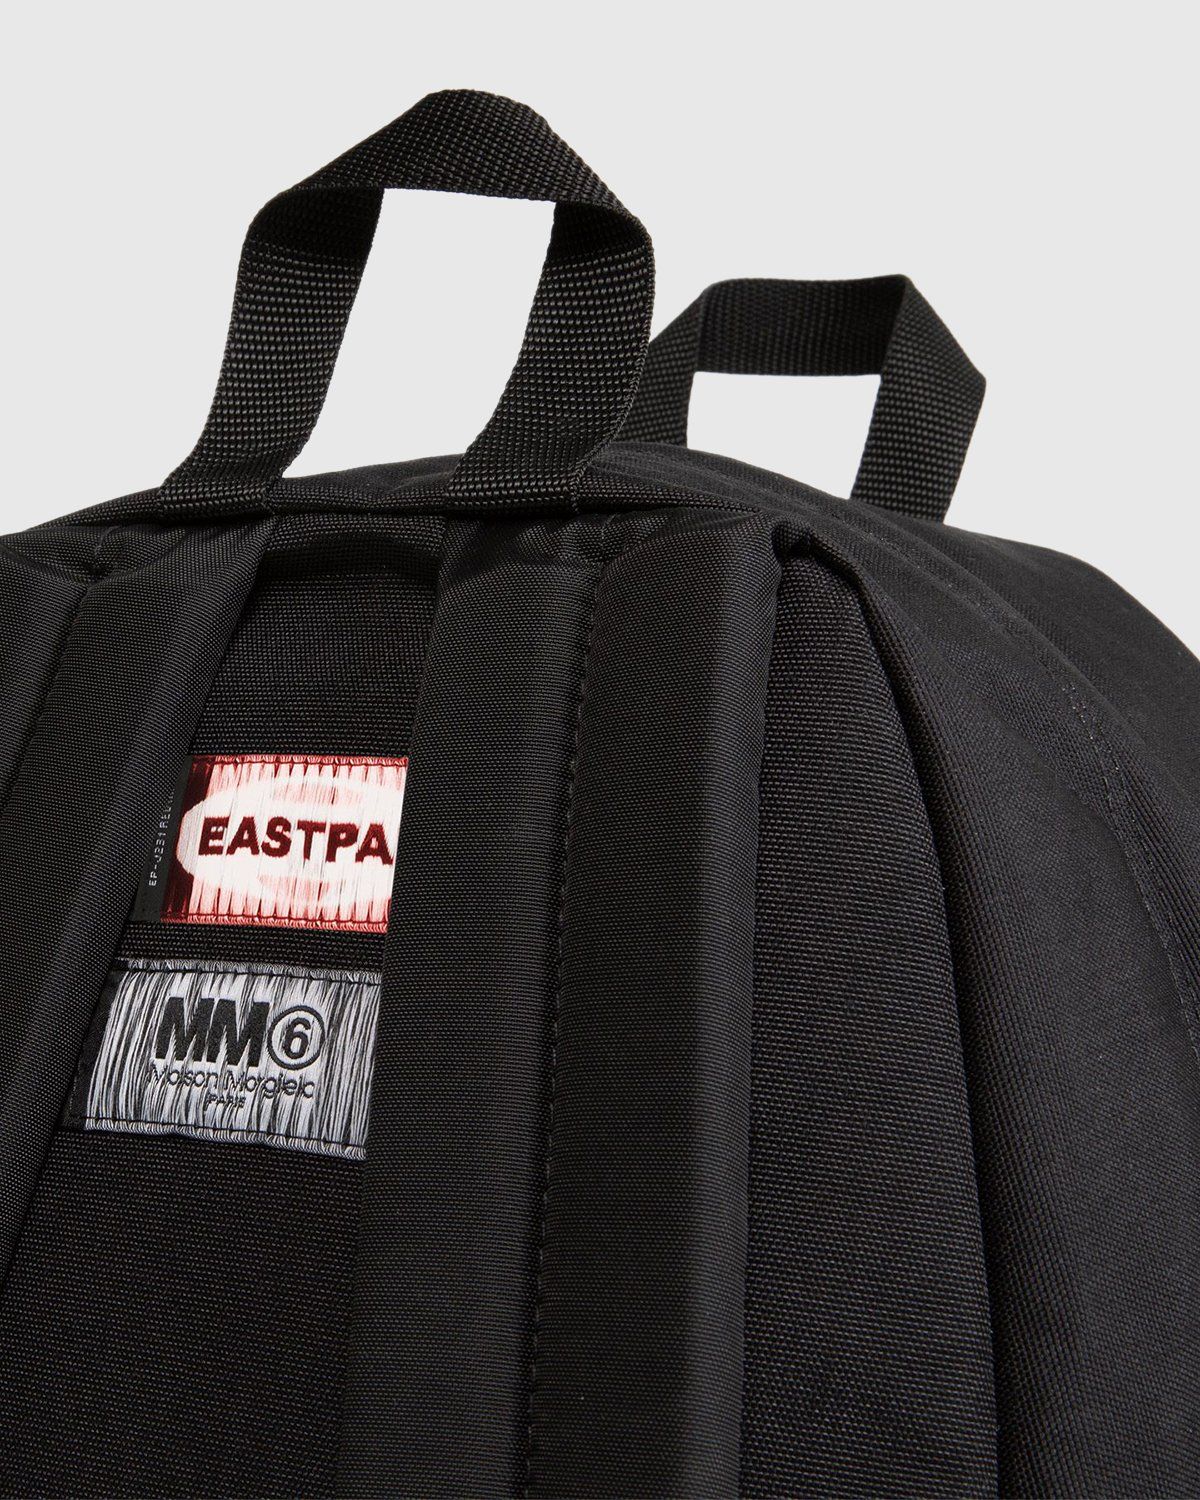 MM6 Maison Margiela x Eastpak – Padded XL Backpack Black